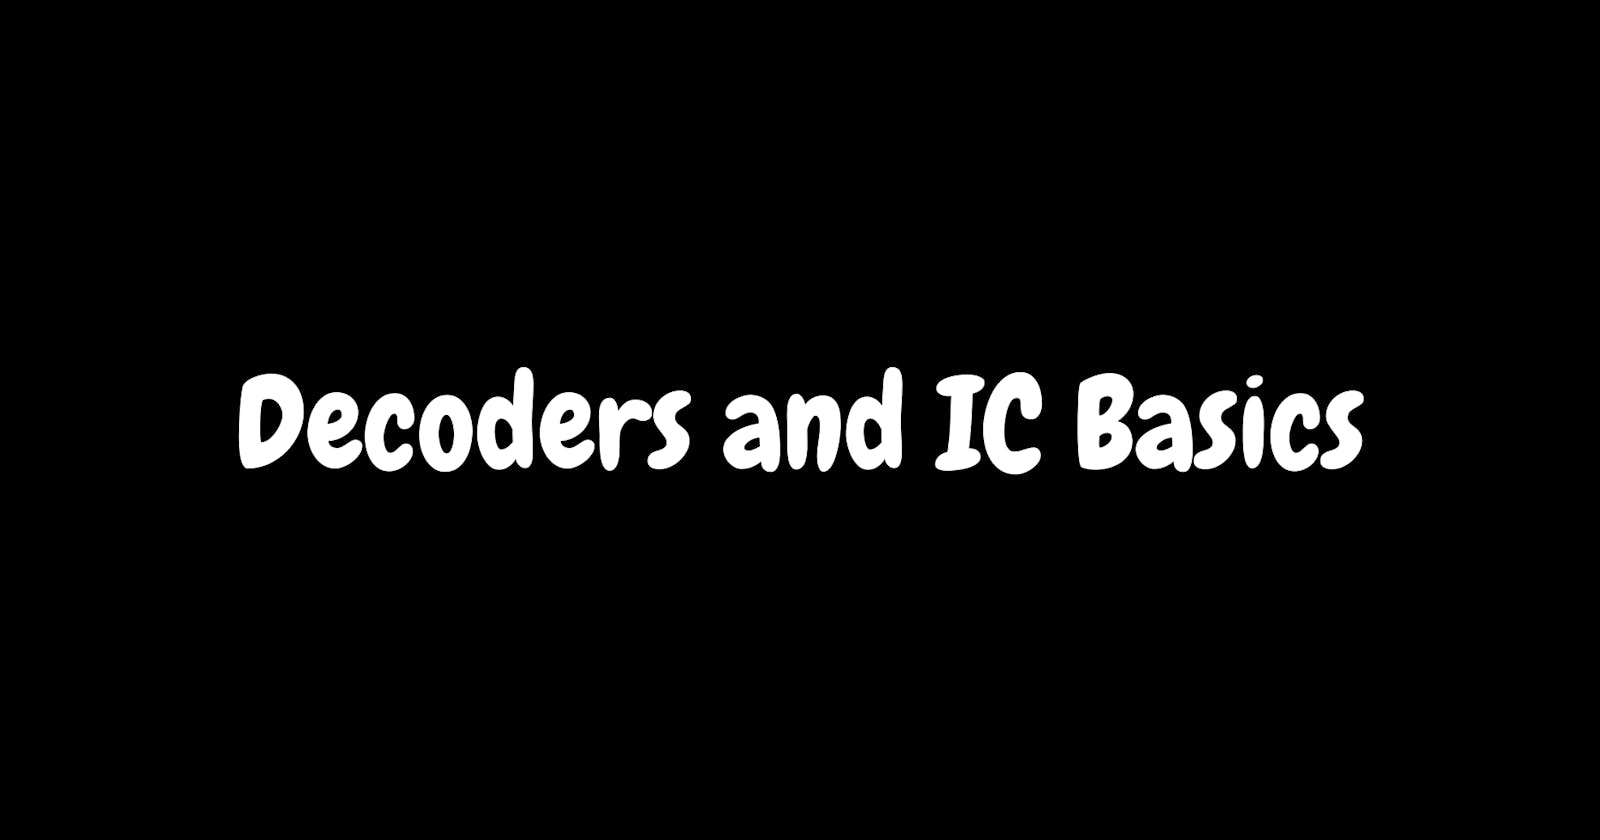 Decoders and IC Basics